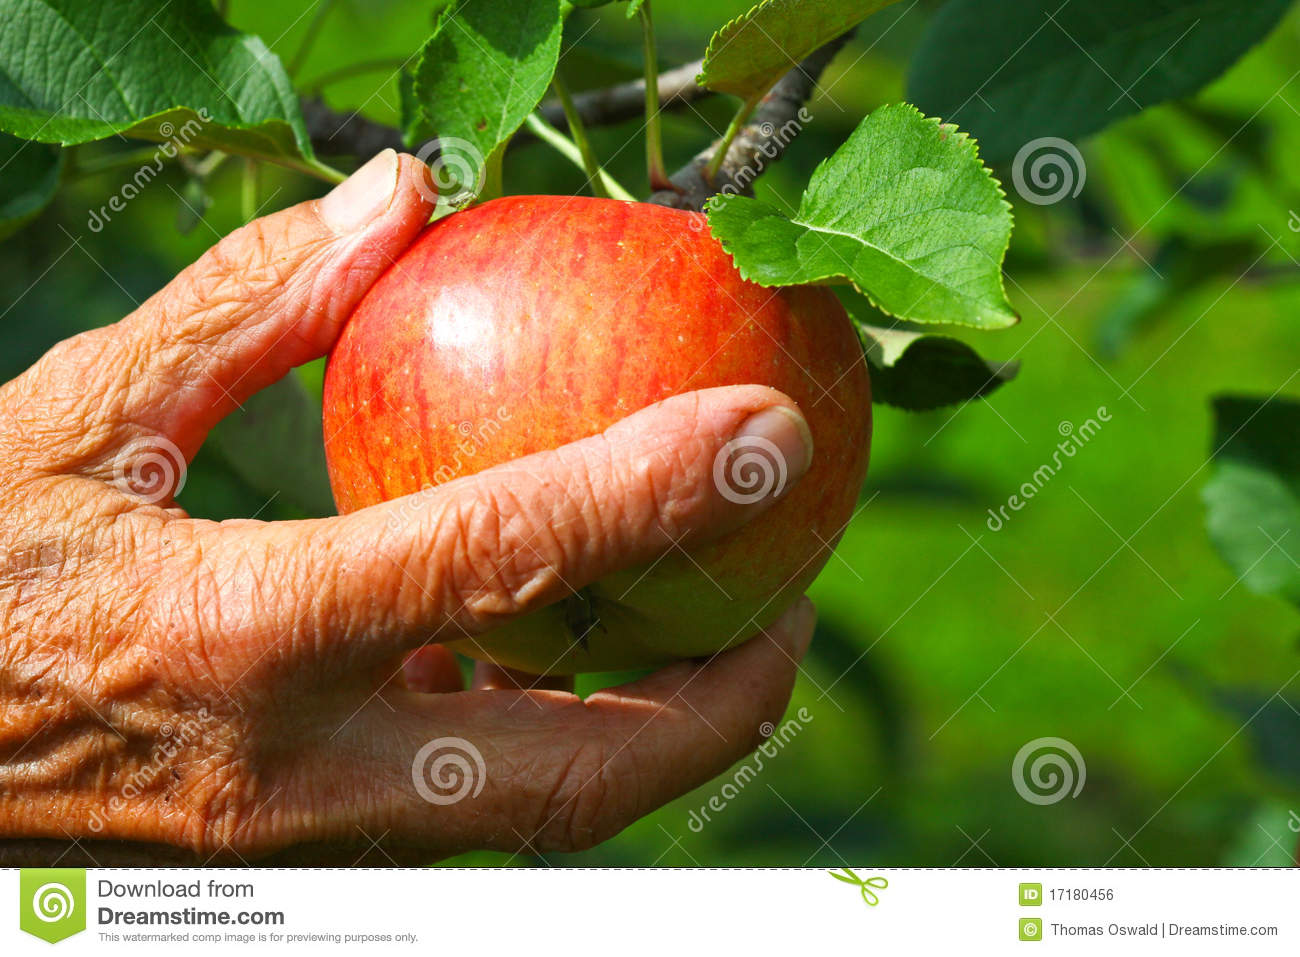 Old Women Picking An Apple Royalty Free Stock Image   Image  17180456